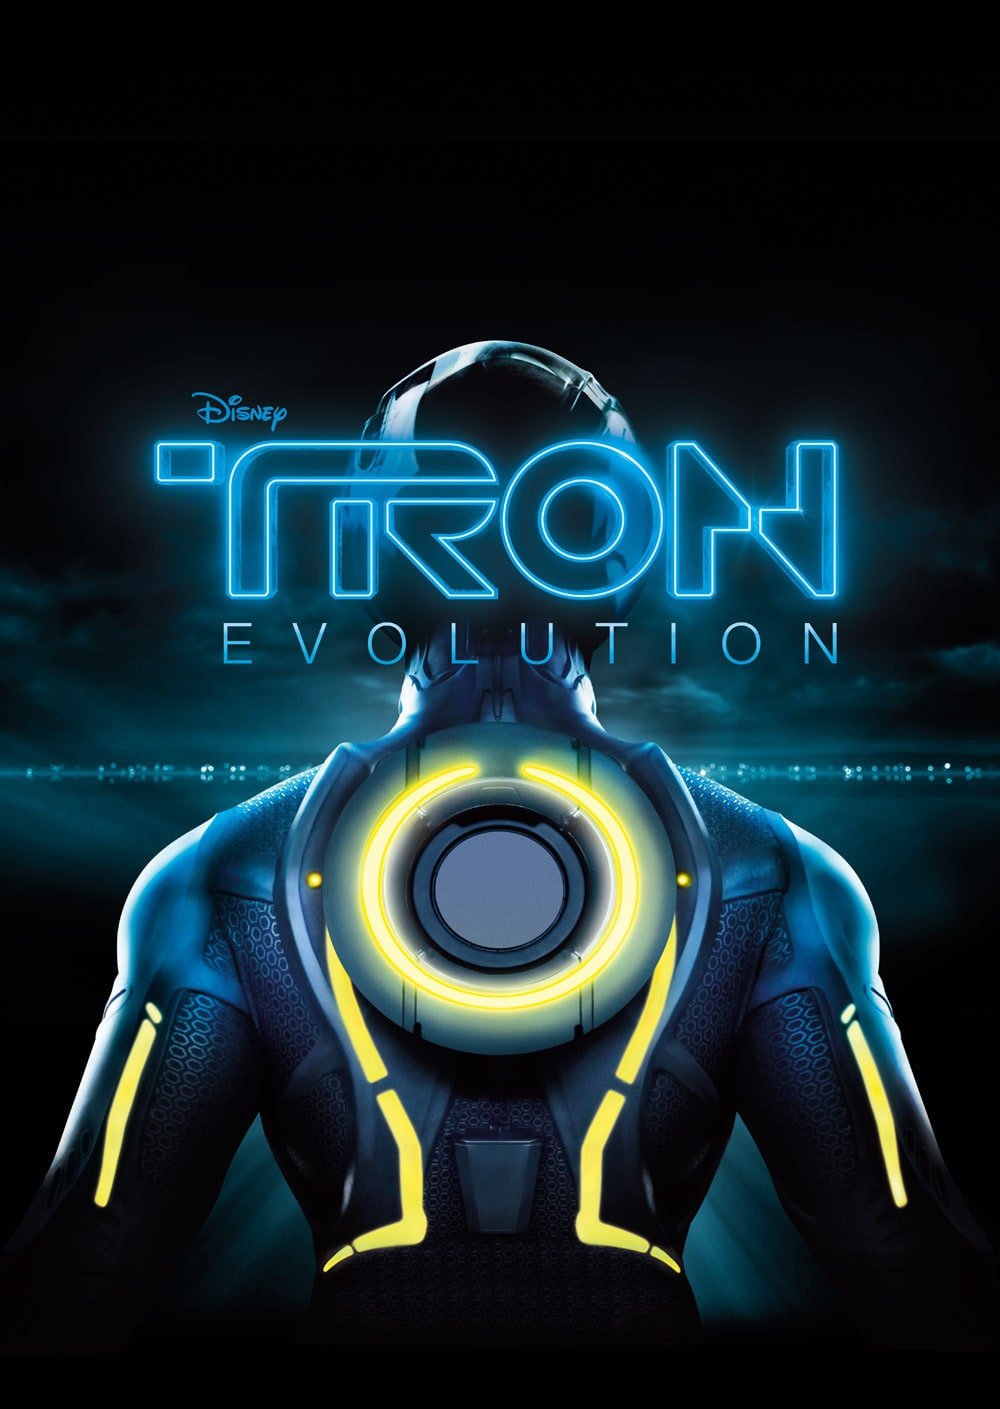 Image of Tron: Evolution